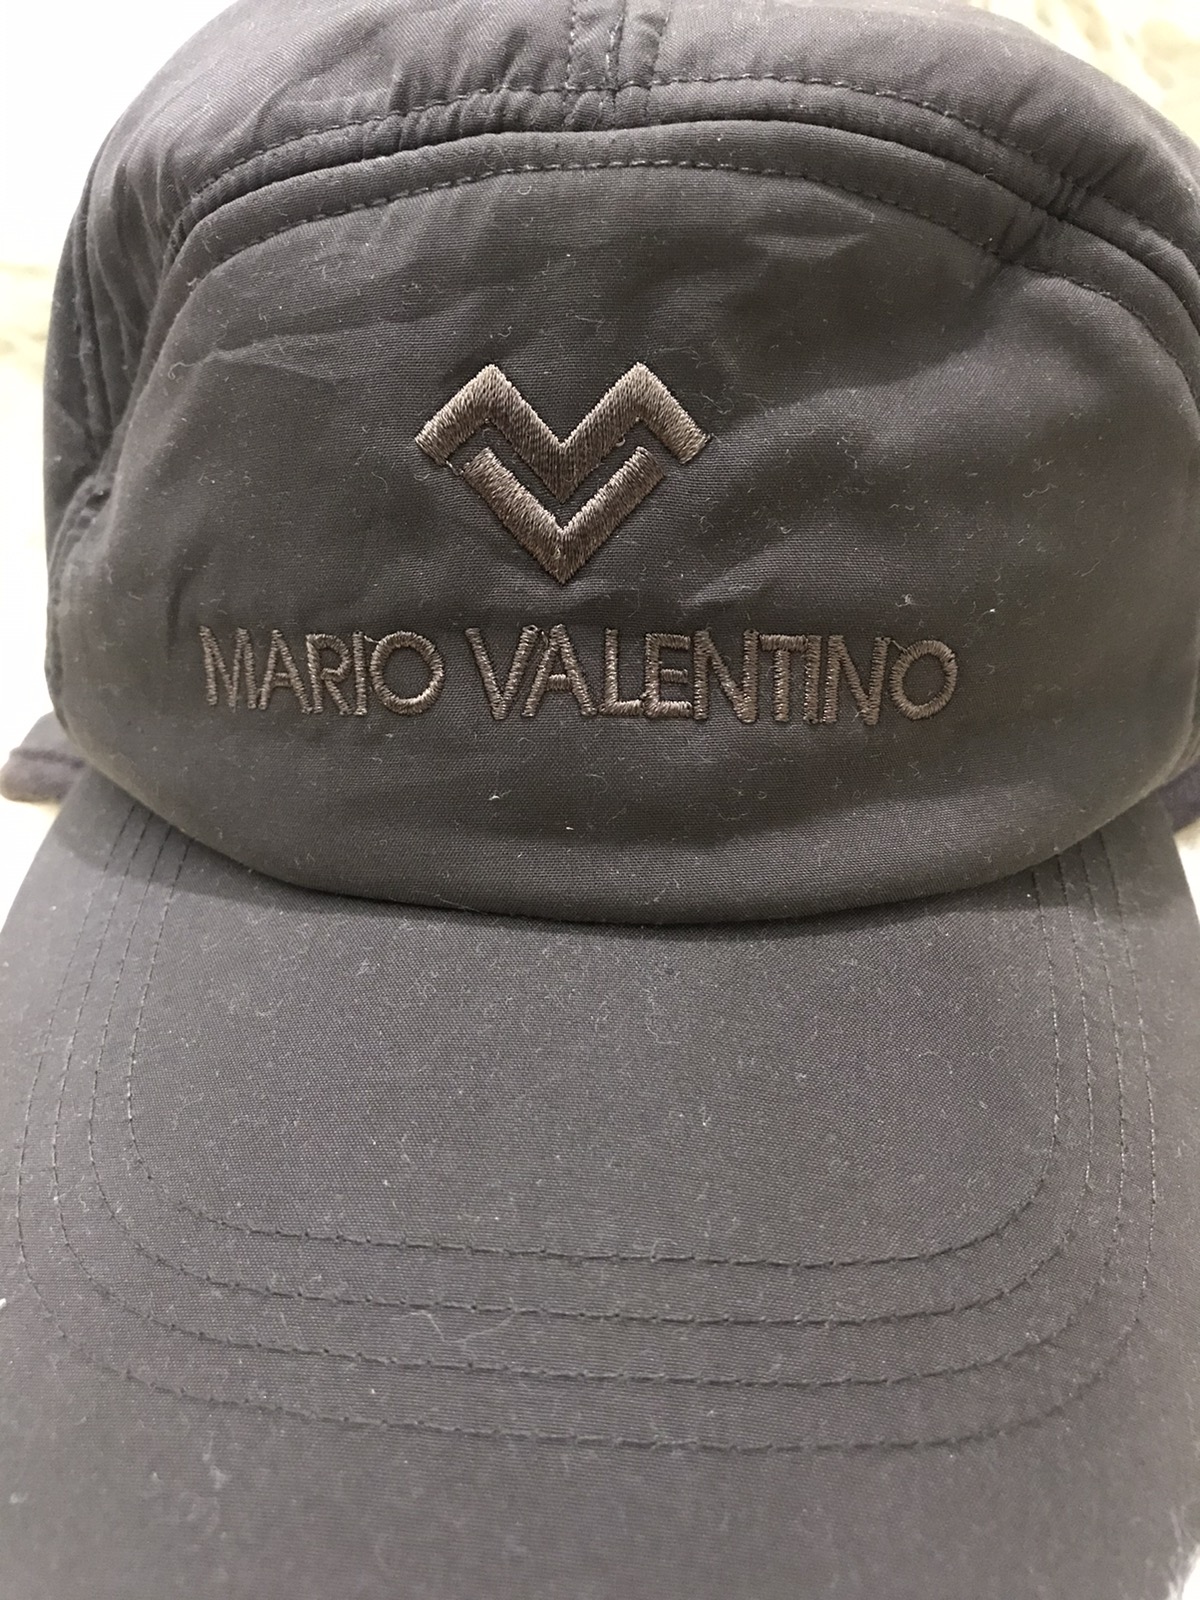 MARIO VALENTINO SHASTA TRAPPER HAT - 2